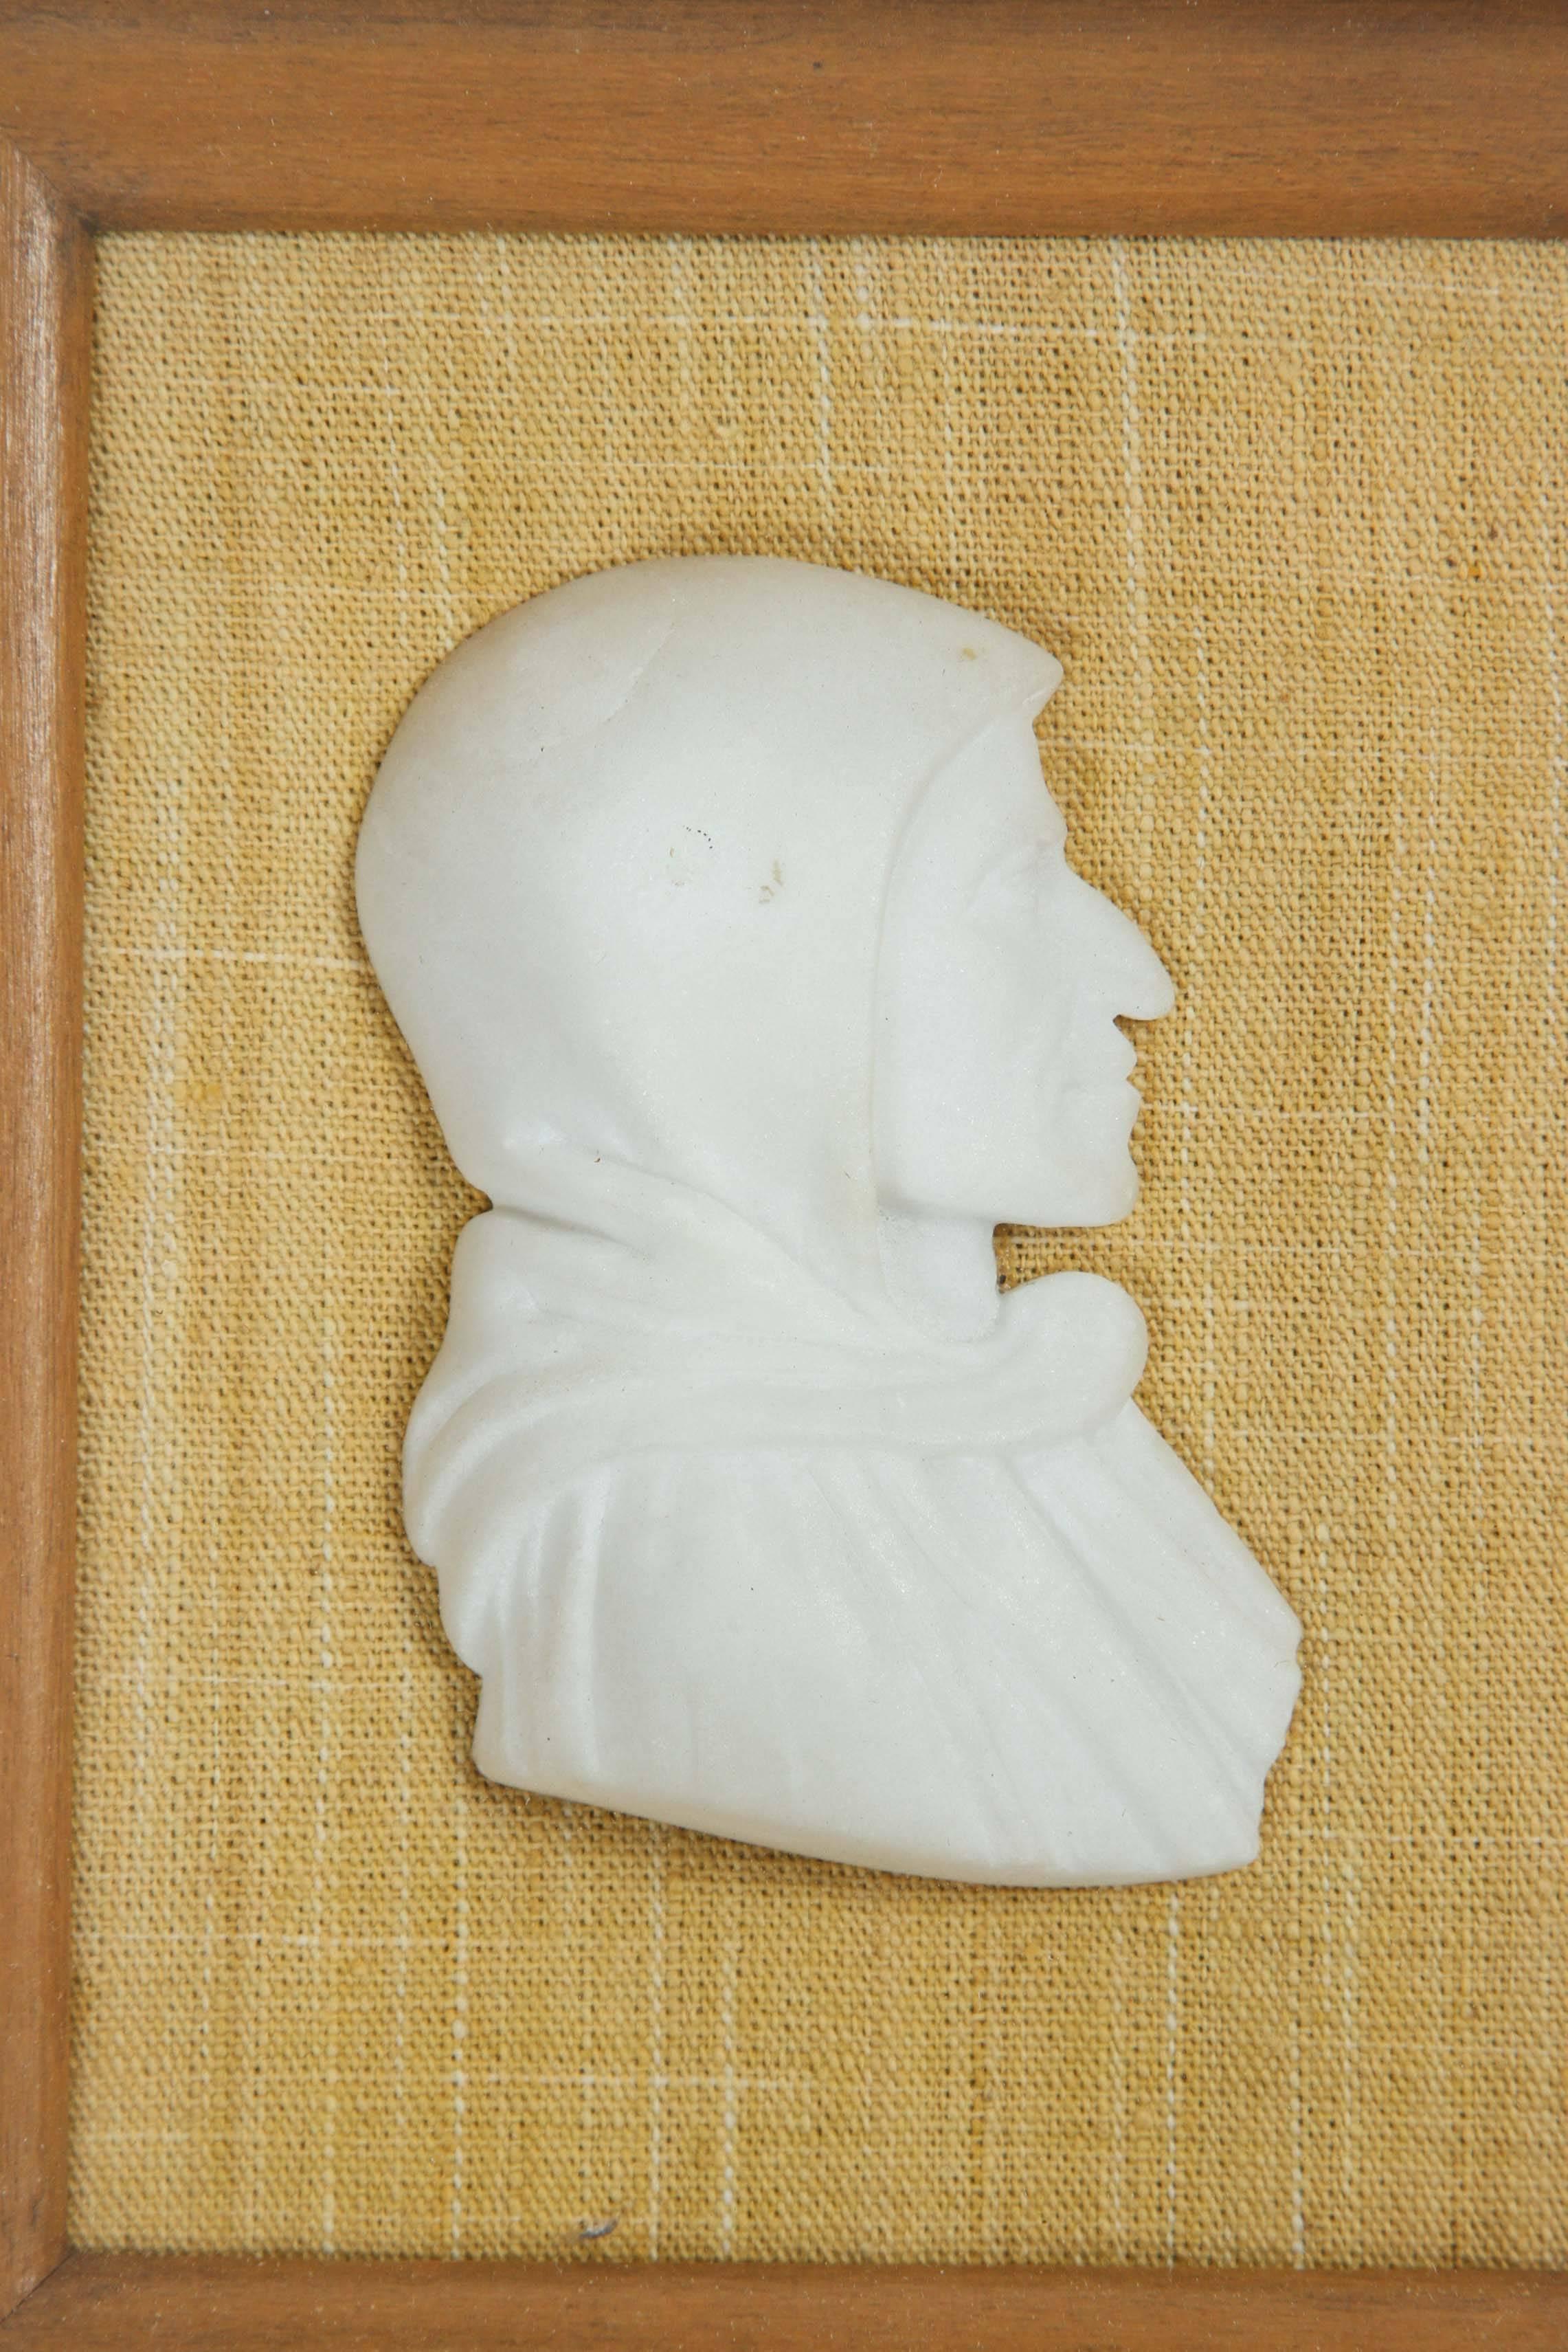 Pair of vintage carved alabaster profile portraits of Dante, framed and mounted on linen.